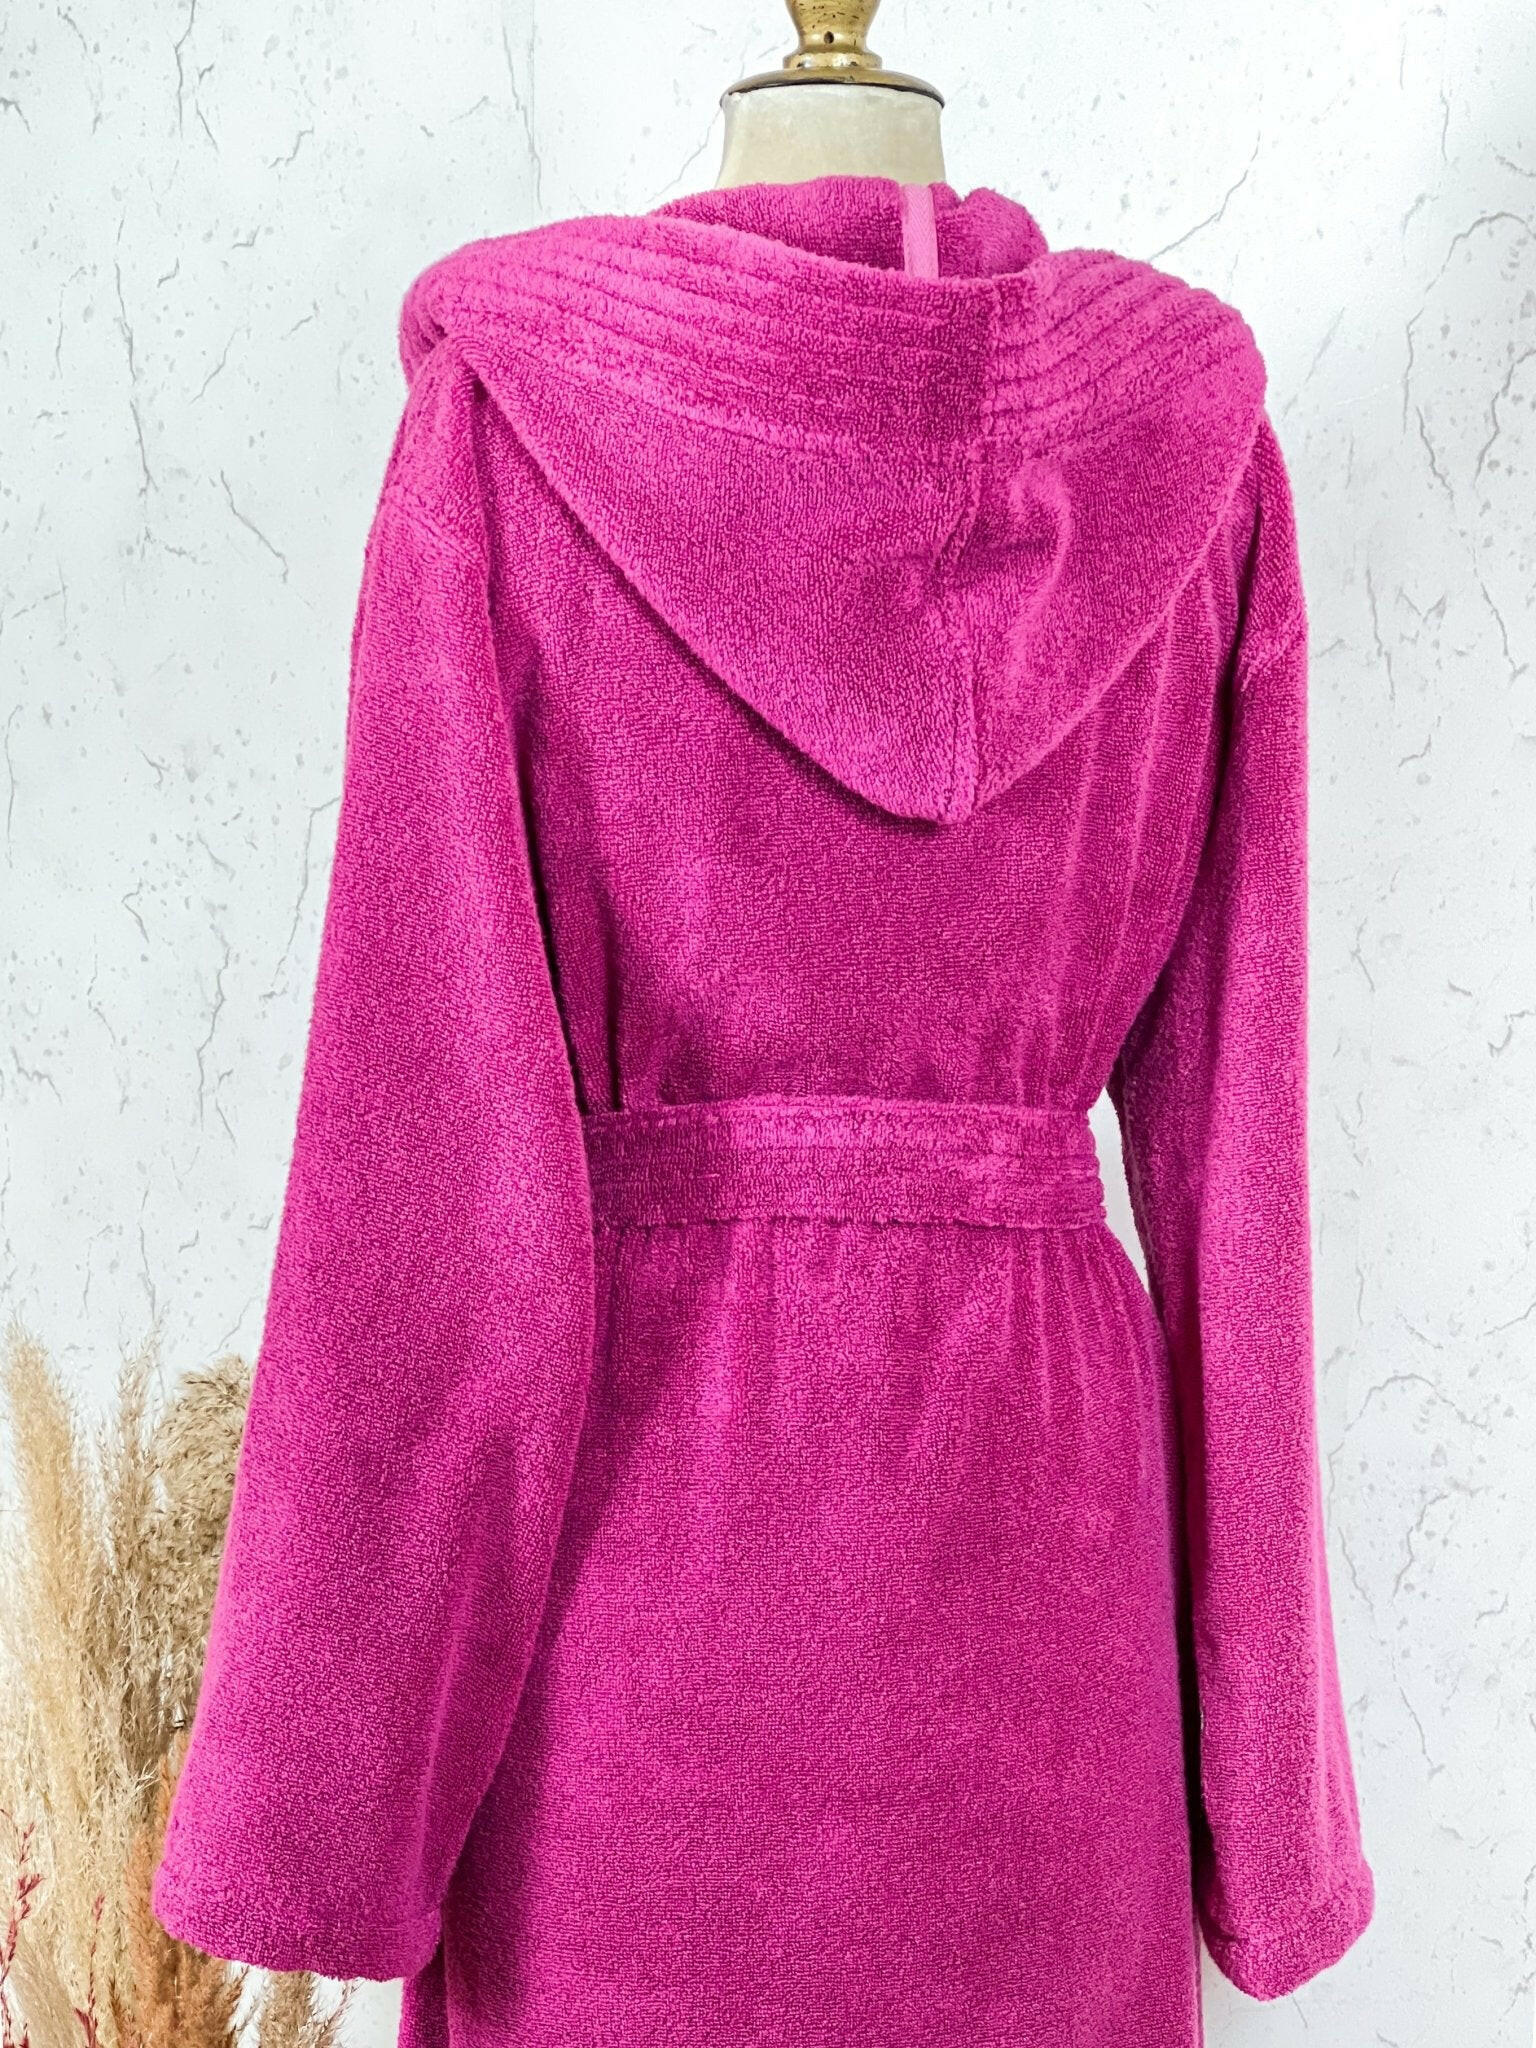 Akay Women's Pink Hooded Bathrobe, Best Luxury Micro Cotton Soft Turkish Robe Gown by Creative Home,BRW-HRSN-AK-S,BRW-HRSN-AK-M,BRW-HRSN-AK-L,BRW-HRSN-AK-XL,BRW-HRSN-AK-XXL